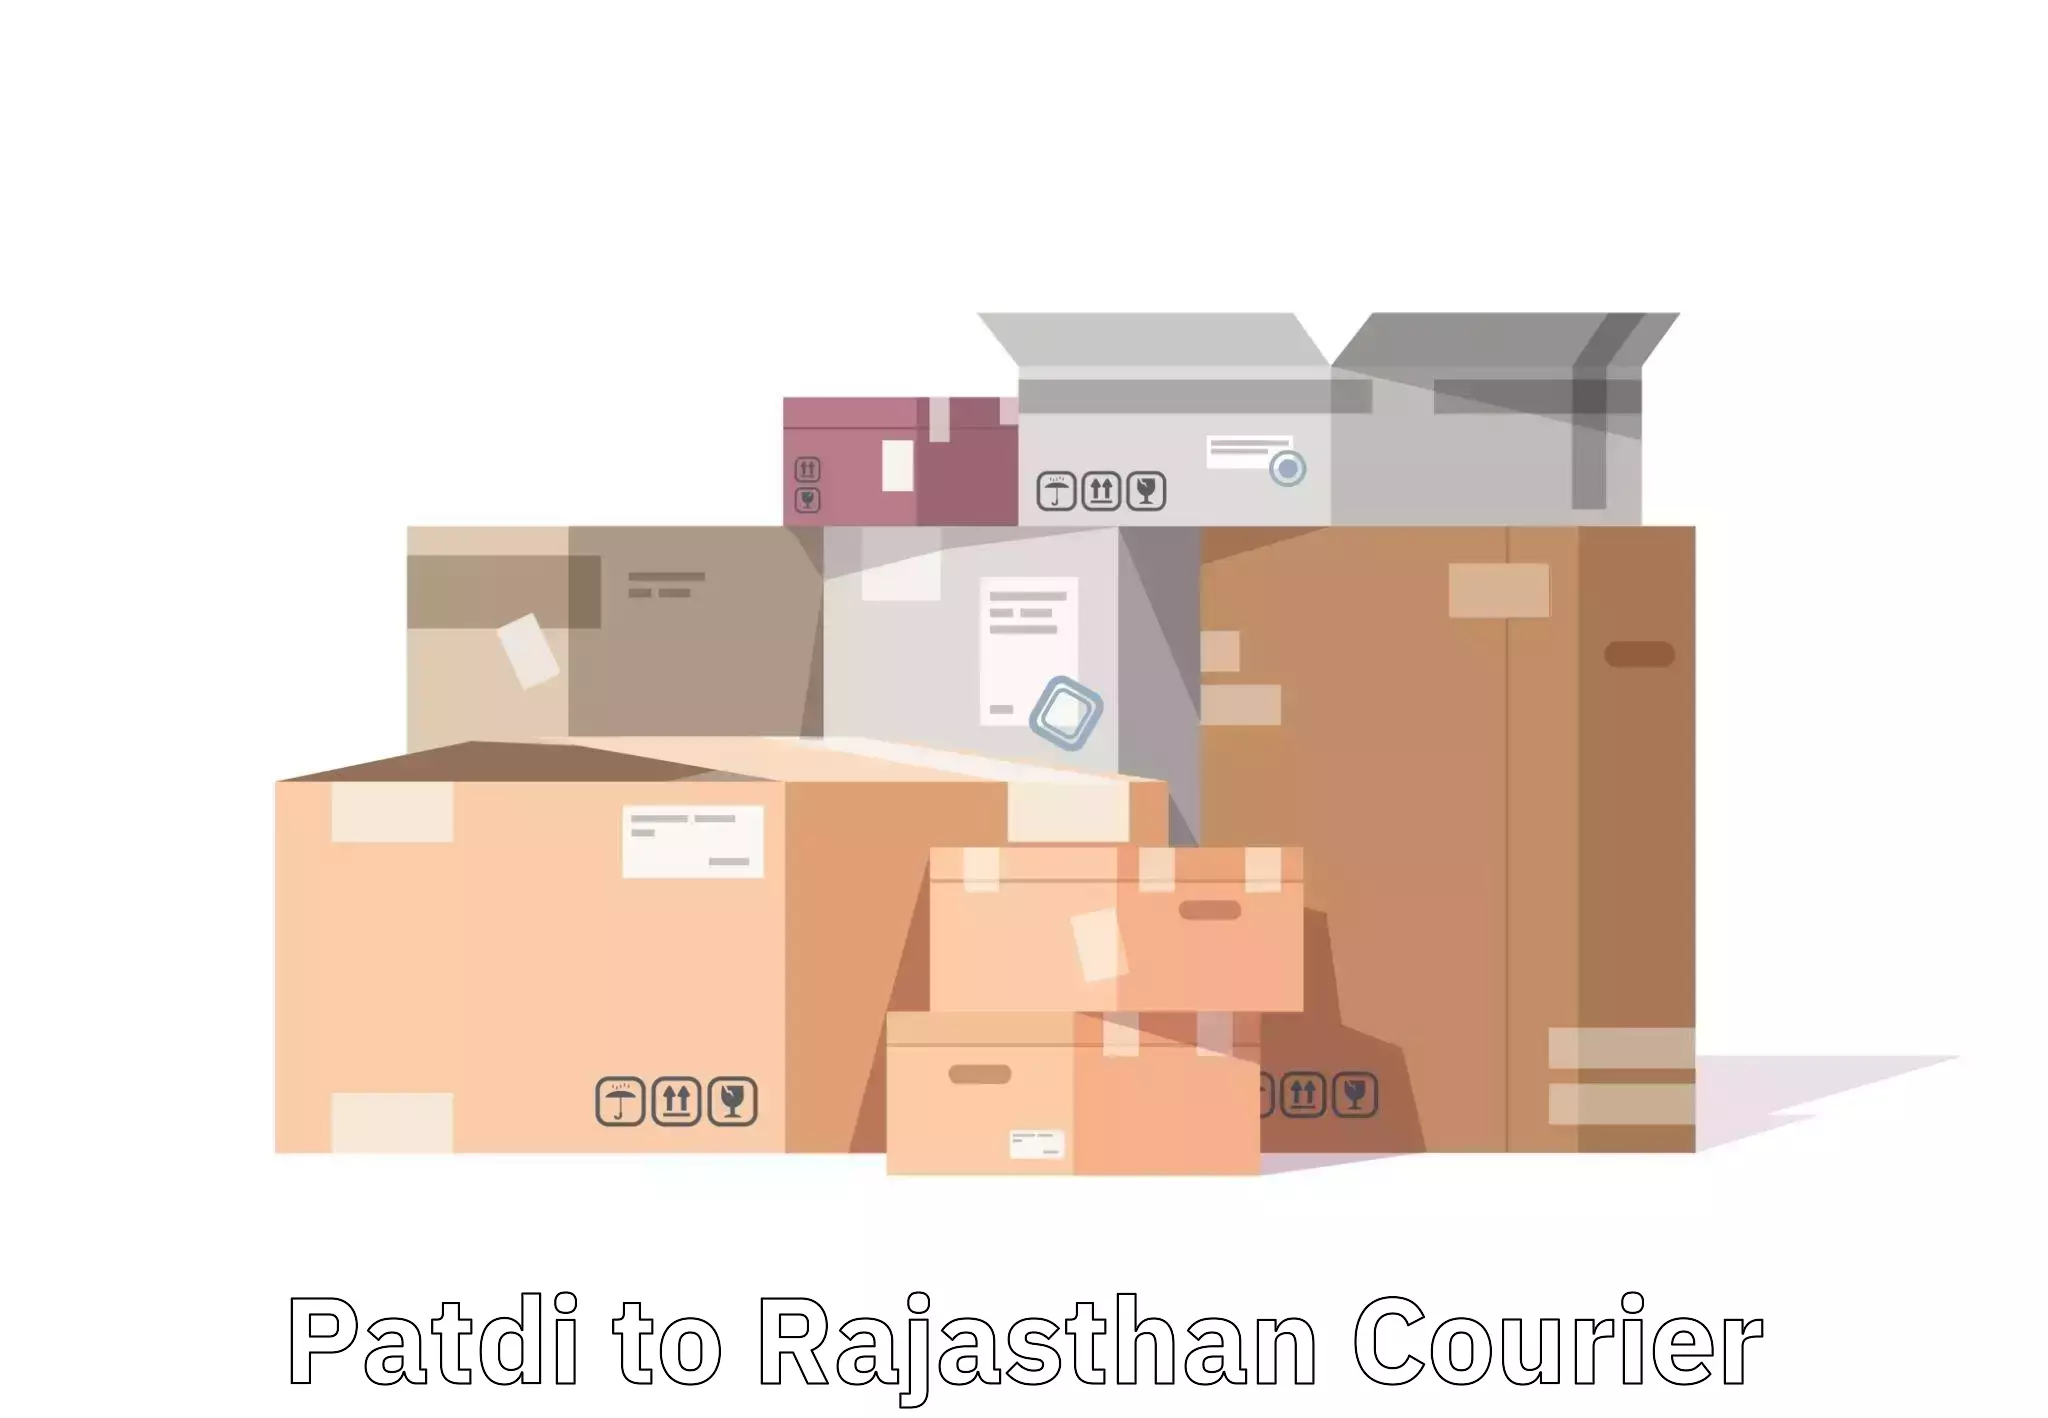 Baggage transport network Patdi to Paota